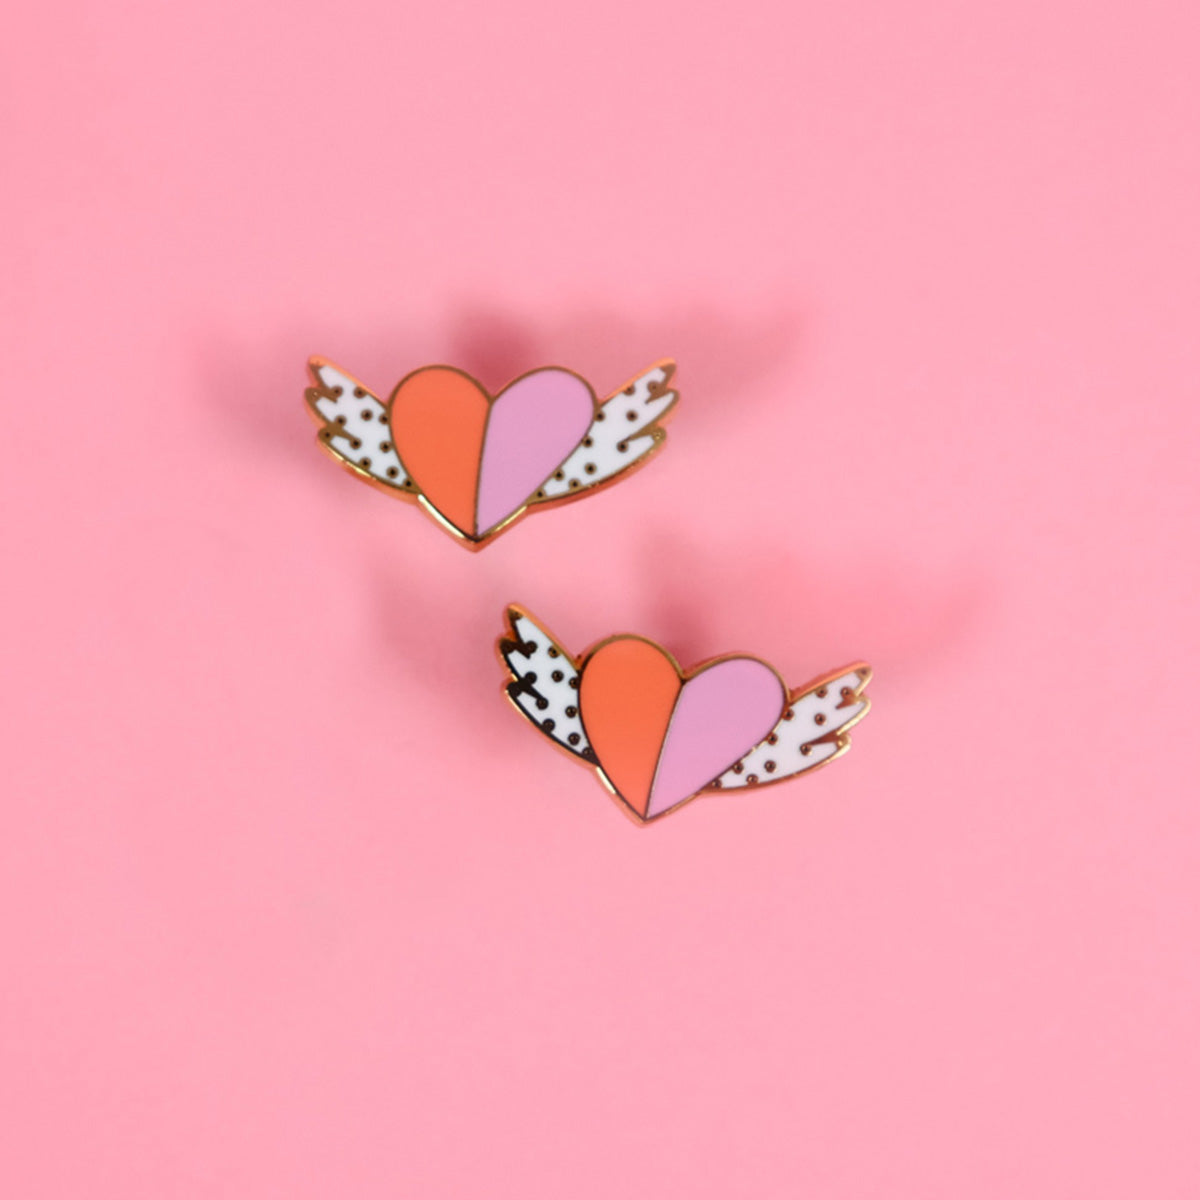 Flatlay of two toned winged heart shaped stud earrings.